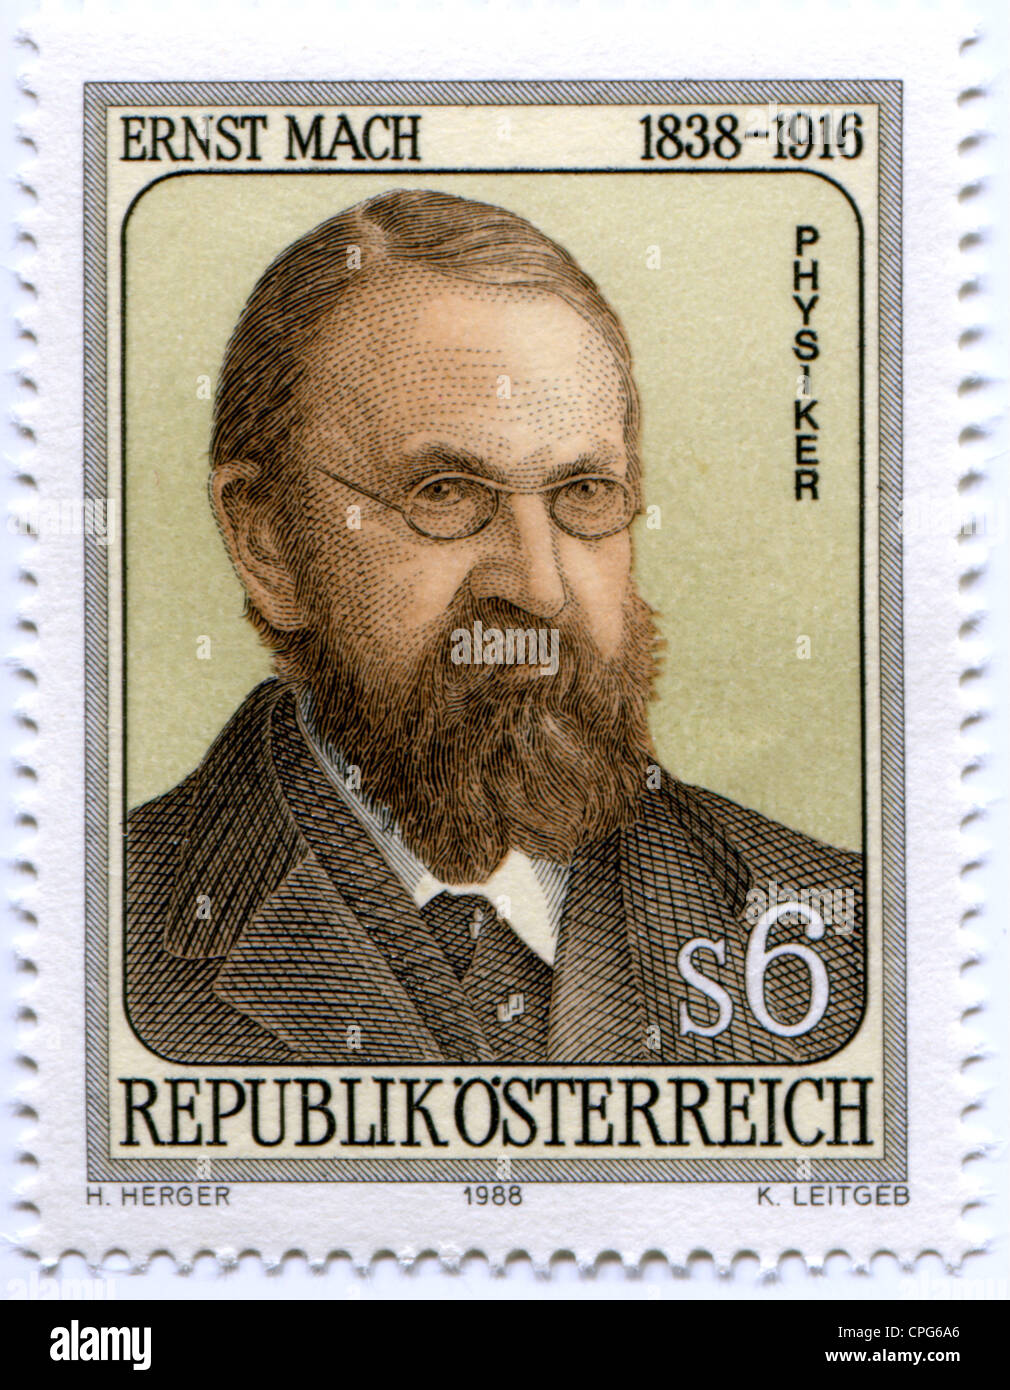 Mach, Ernst, 18.2.1838 - 19.2.1916, Austrian scientist (physicist), philosopher, portrait, on 6 shilling postage stamp, Republic of Austria, 1988, Stock Photo